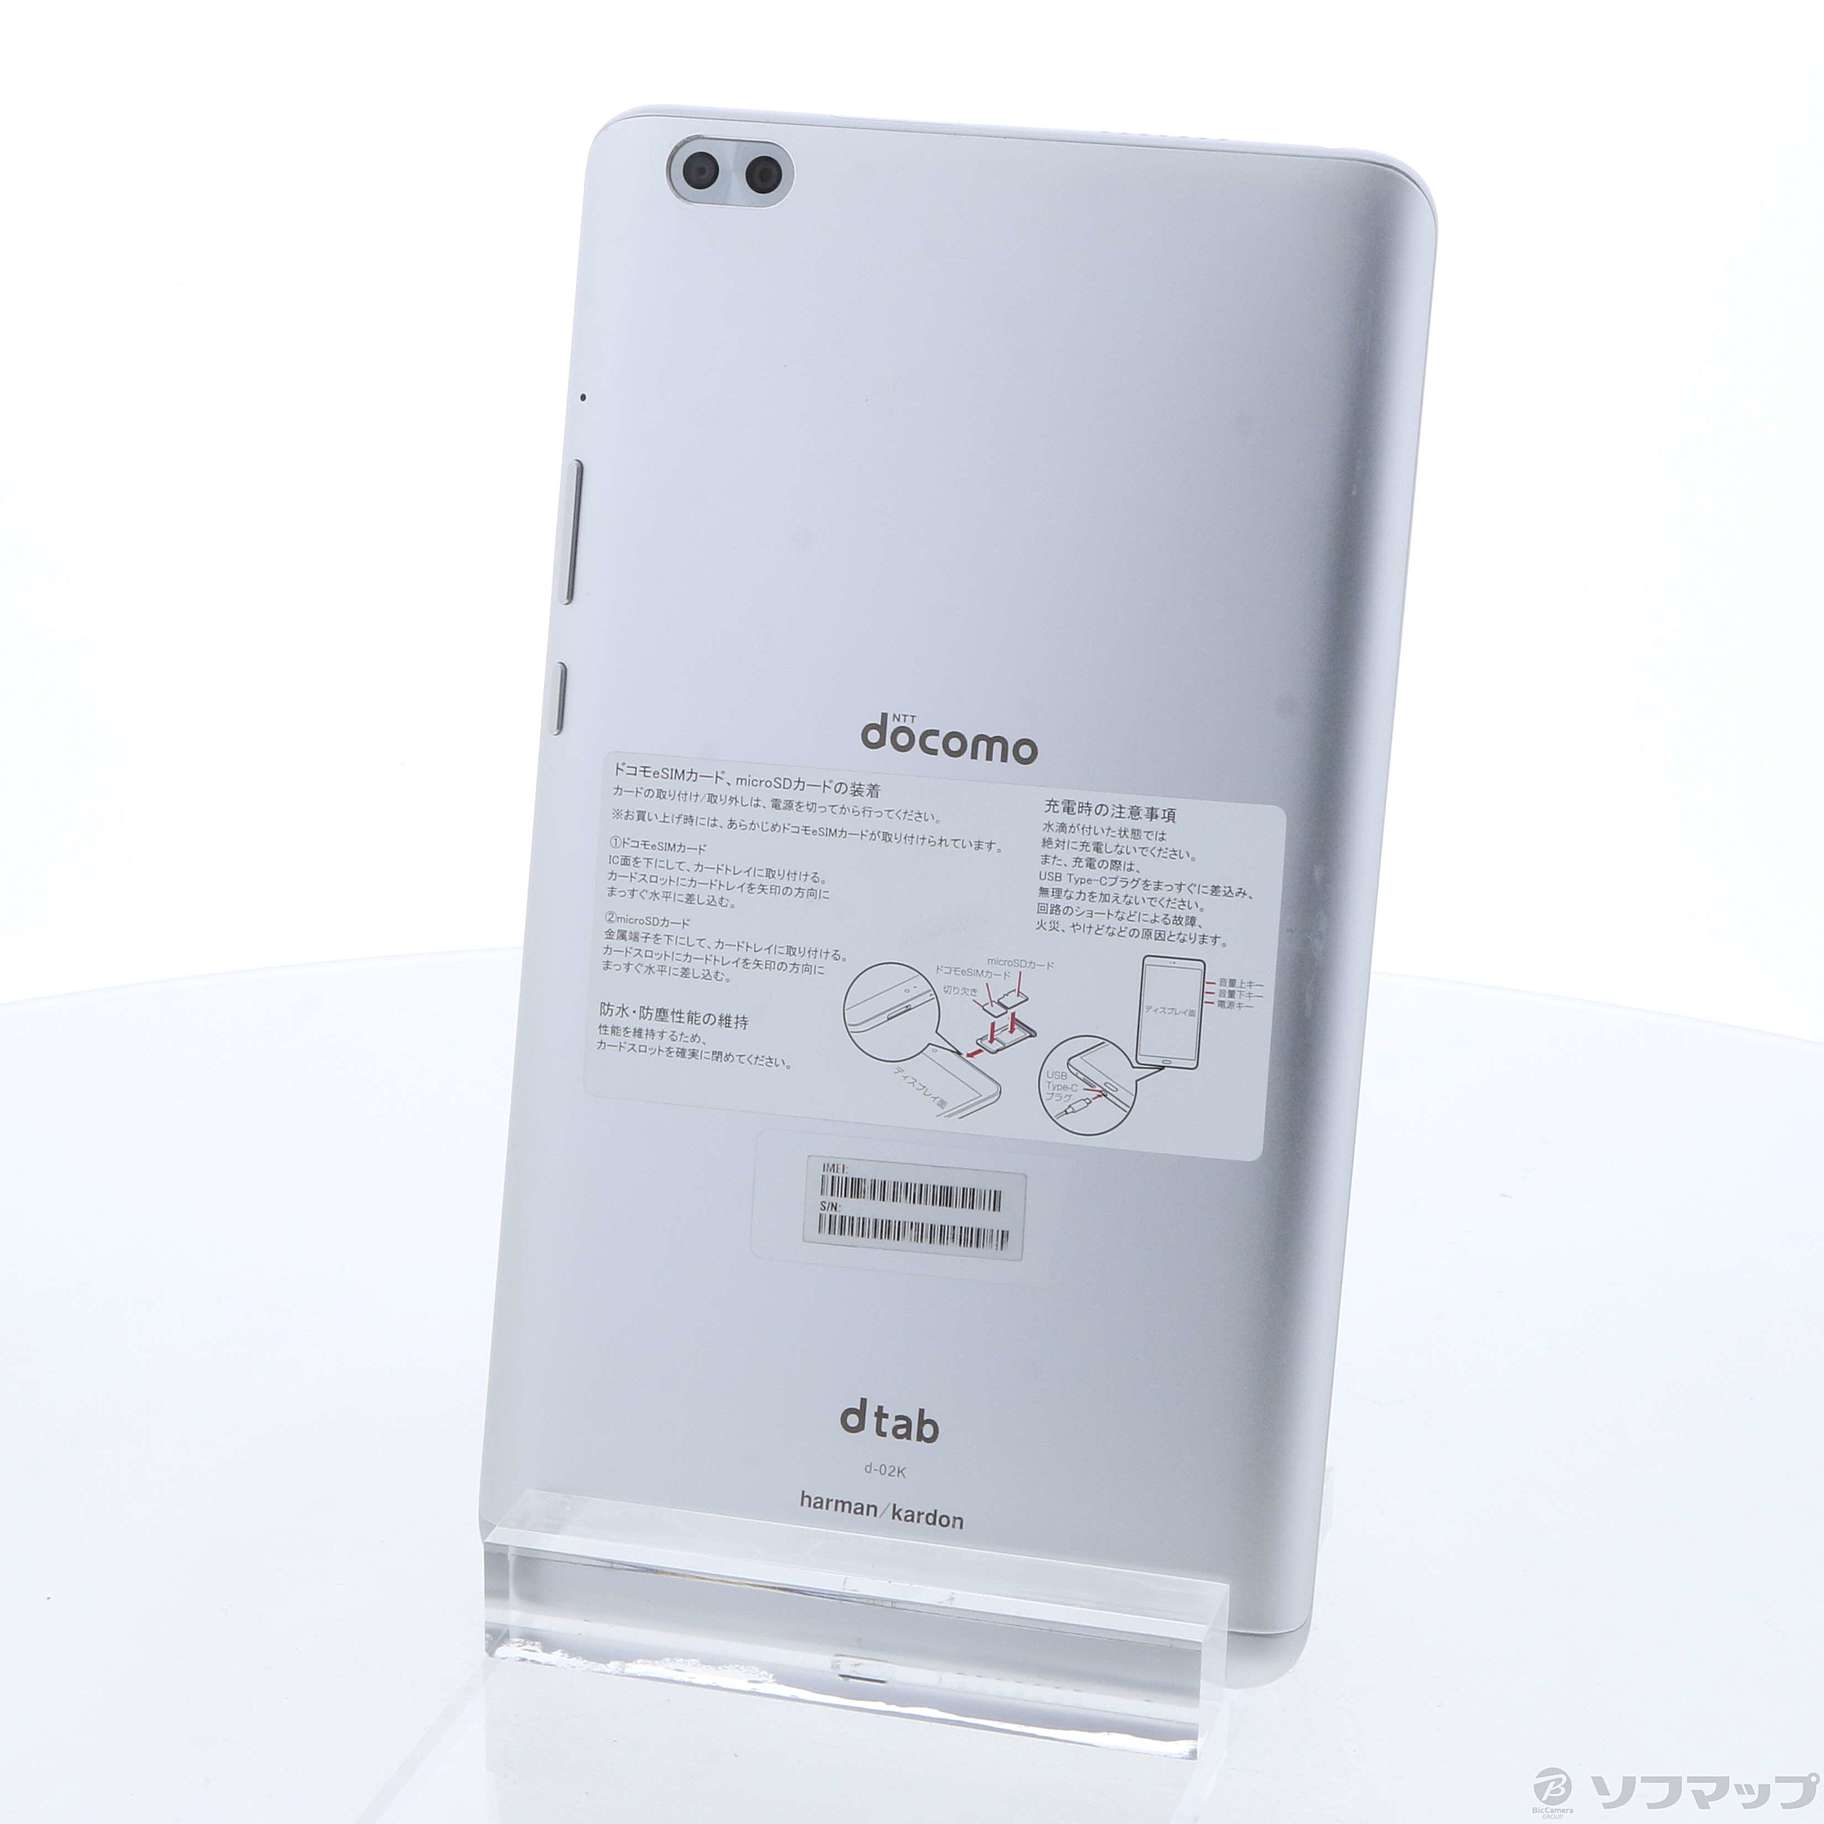 Huawei dtab Compact d-02K 32GB シルバー - rehda.com